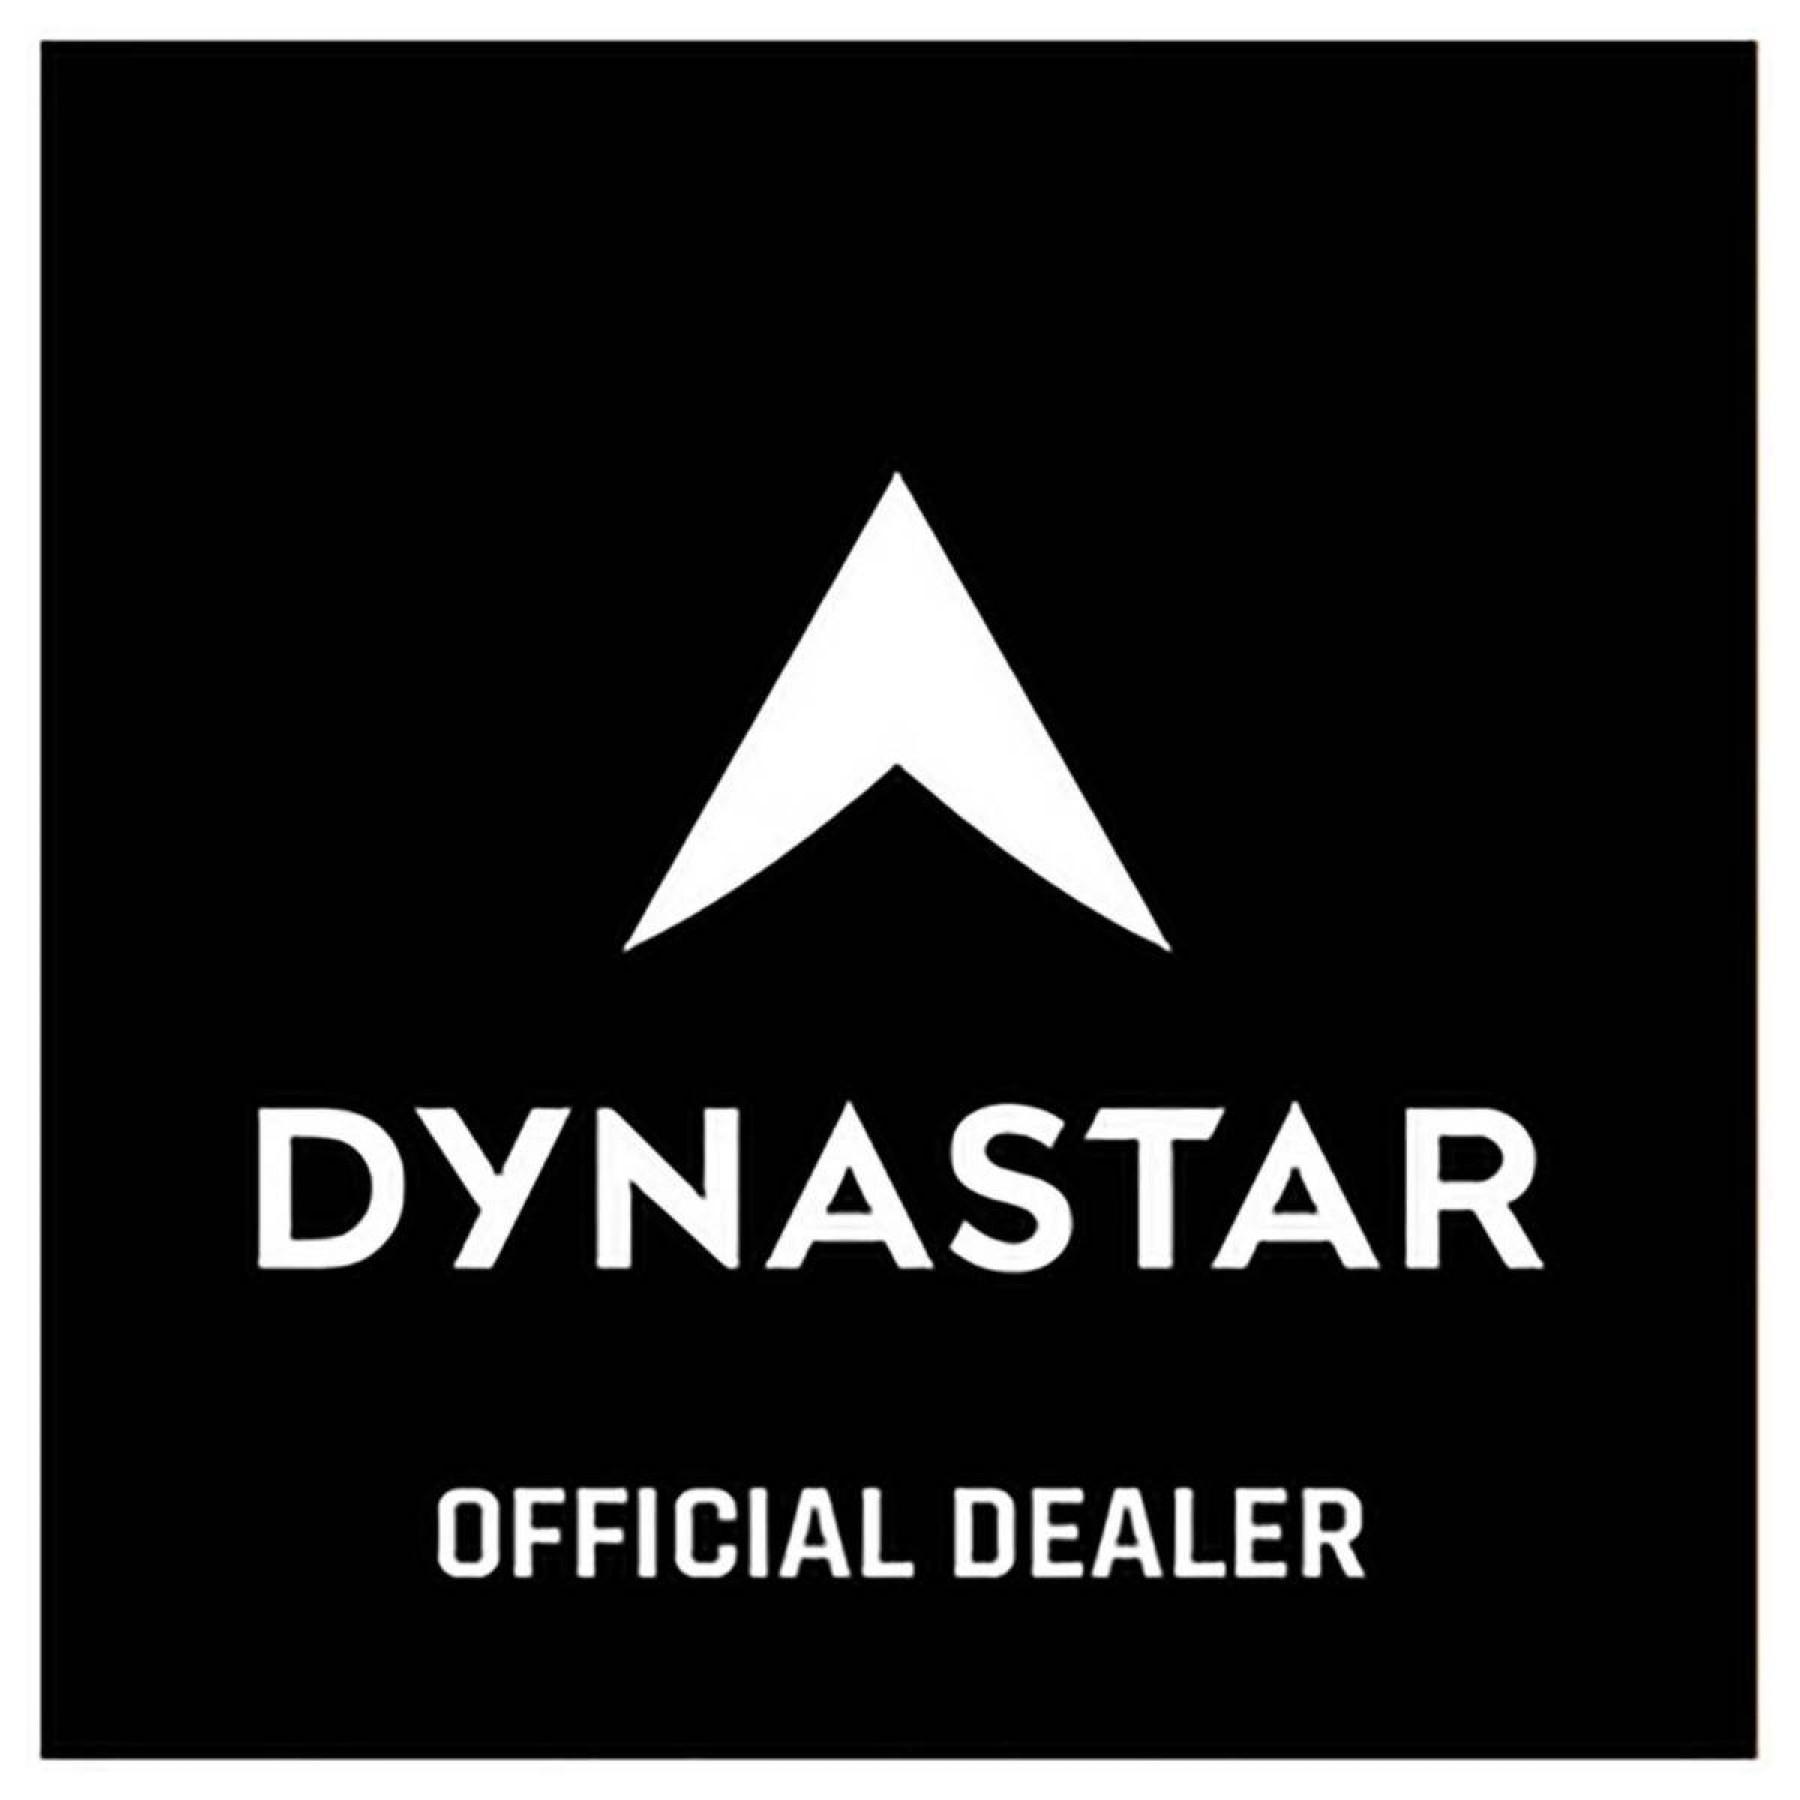 Adesivi Dynastar L2 official dealers